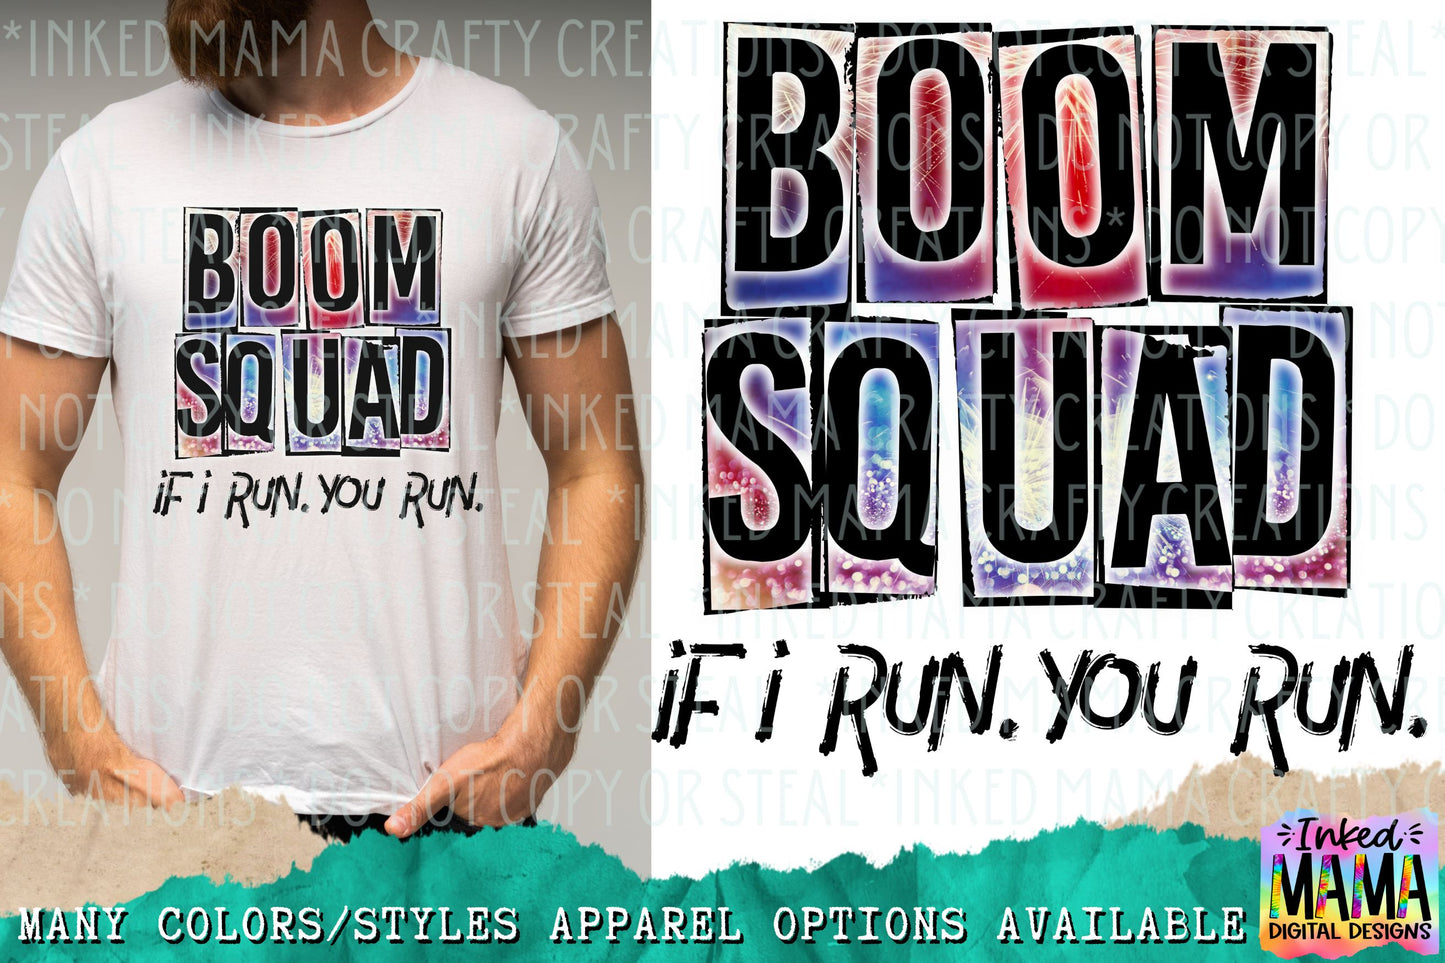 Boom Squad. If I run. you run. - USA 4th of July - Apparel